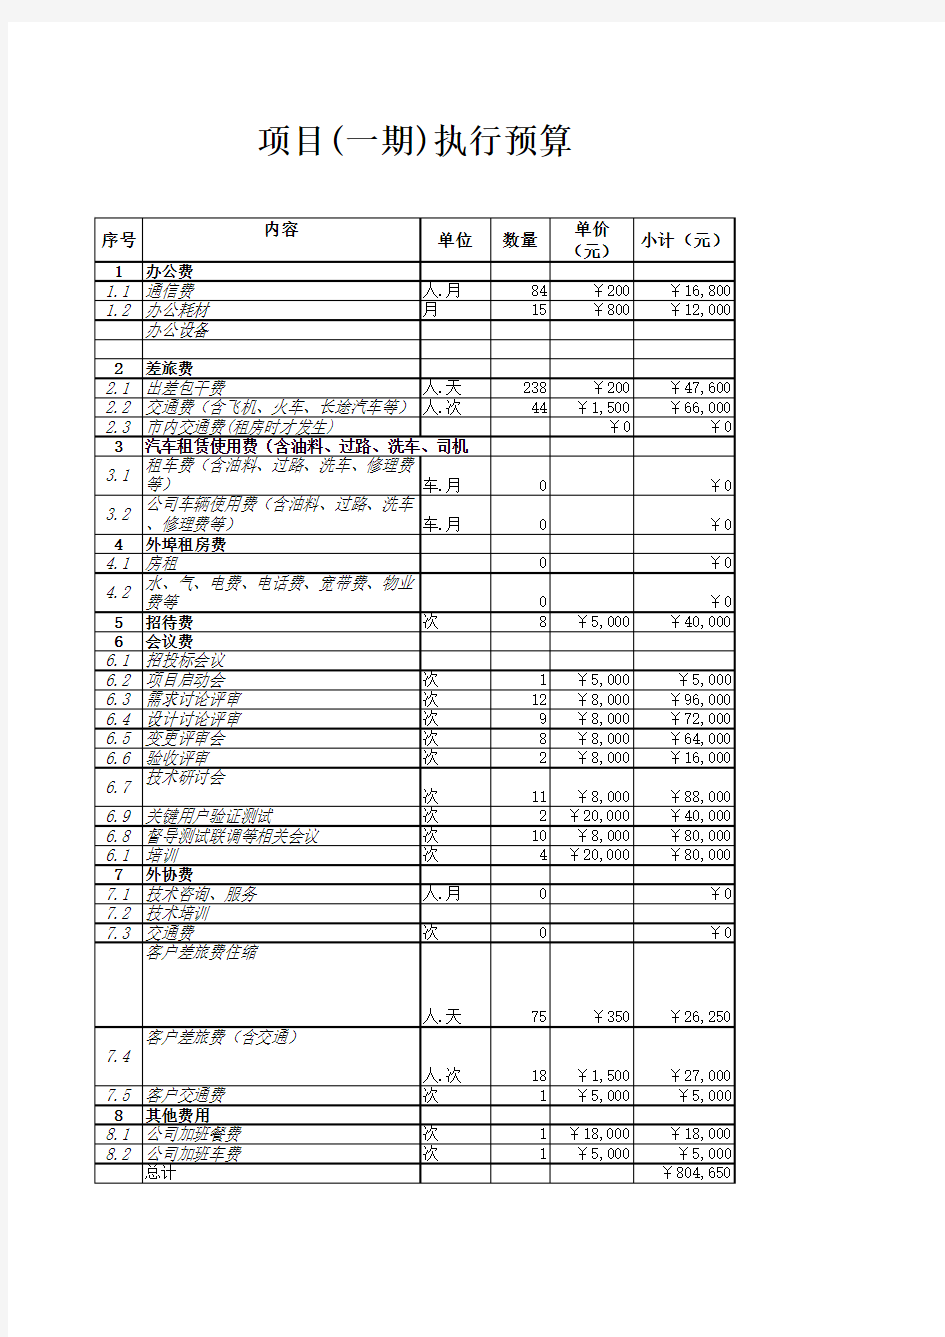 xxx信息化系统 项目预算表(模板)